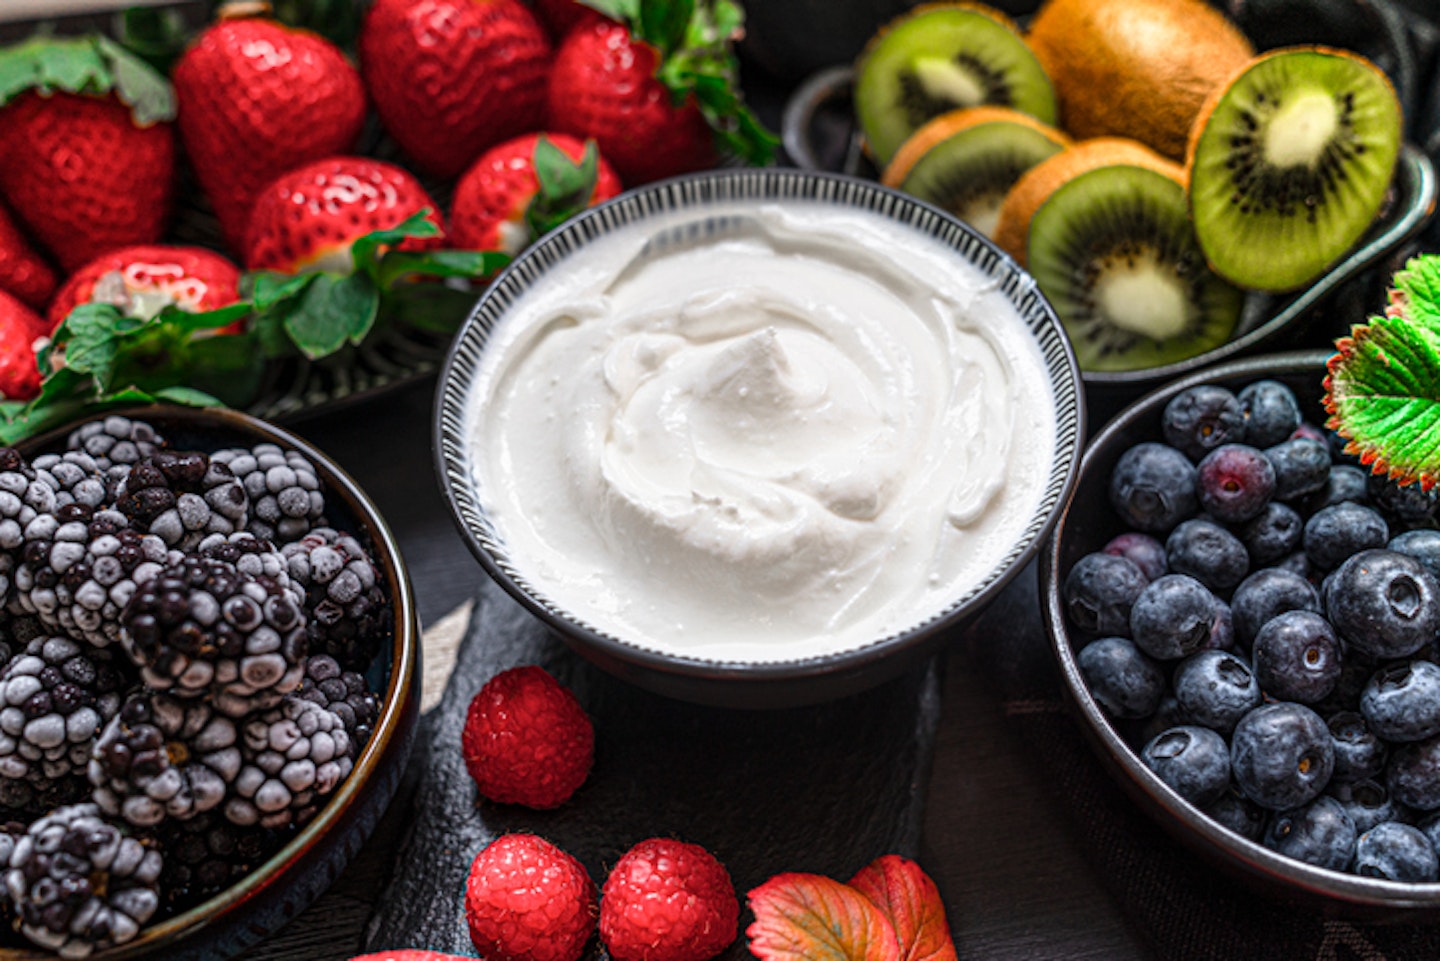 Greek yogurt in a glass jars with spoons,Healthy breakfast with Fresh greek yogurt, muesli and berries on background.